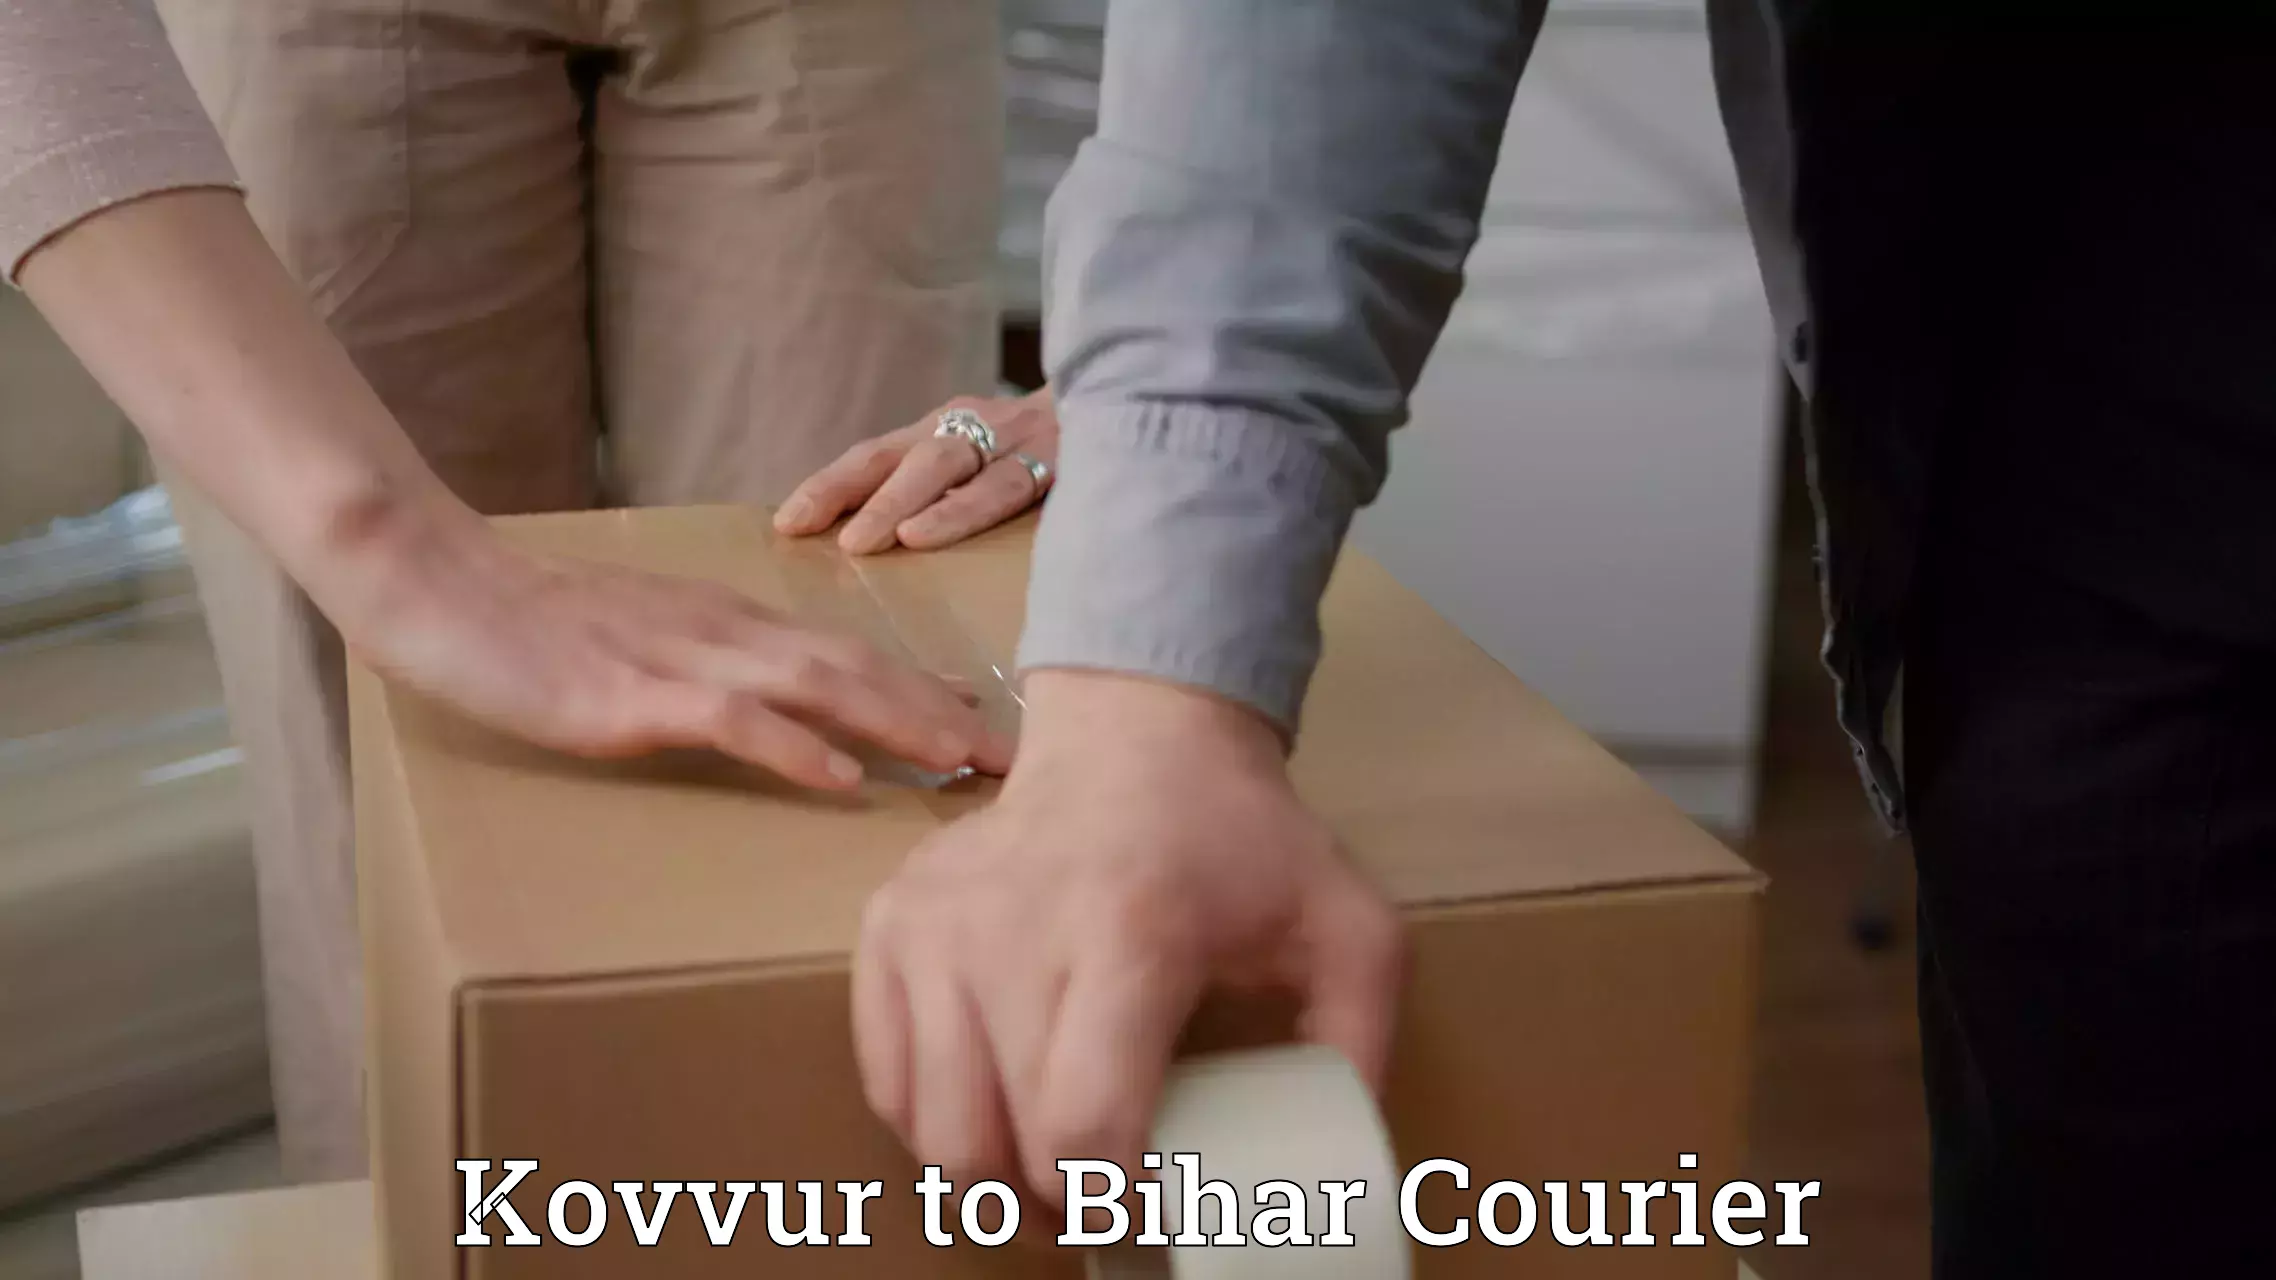 24/7 courier service Kovvur to Pupri